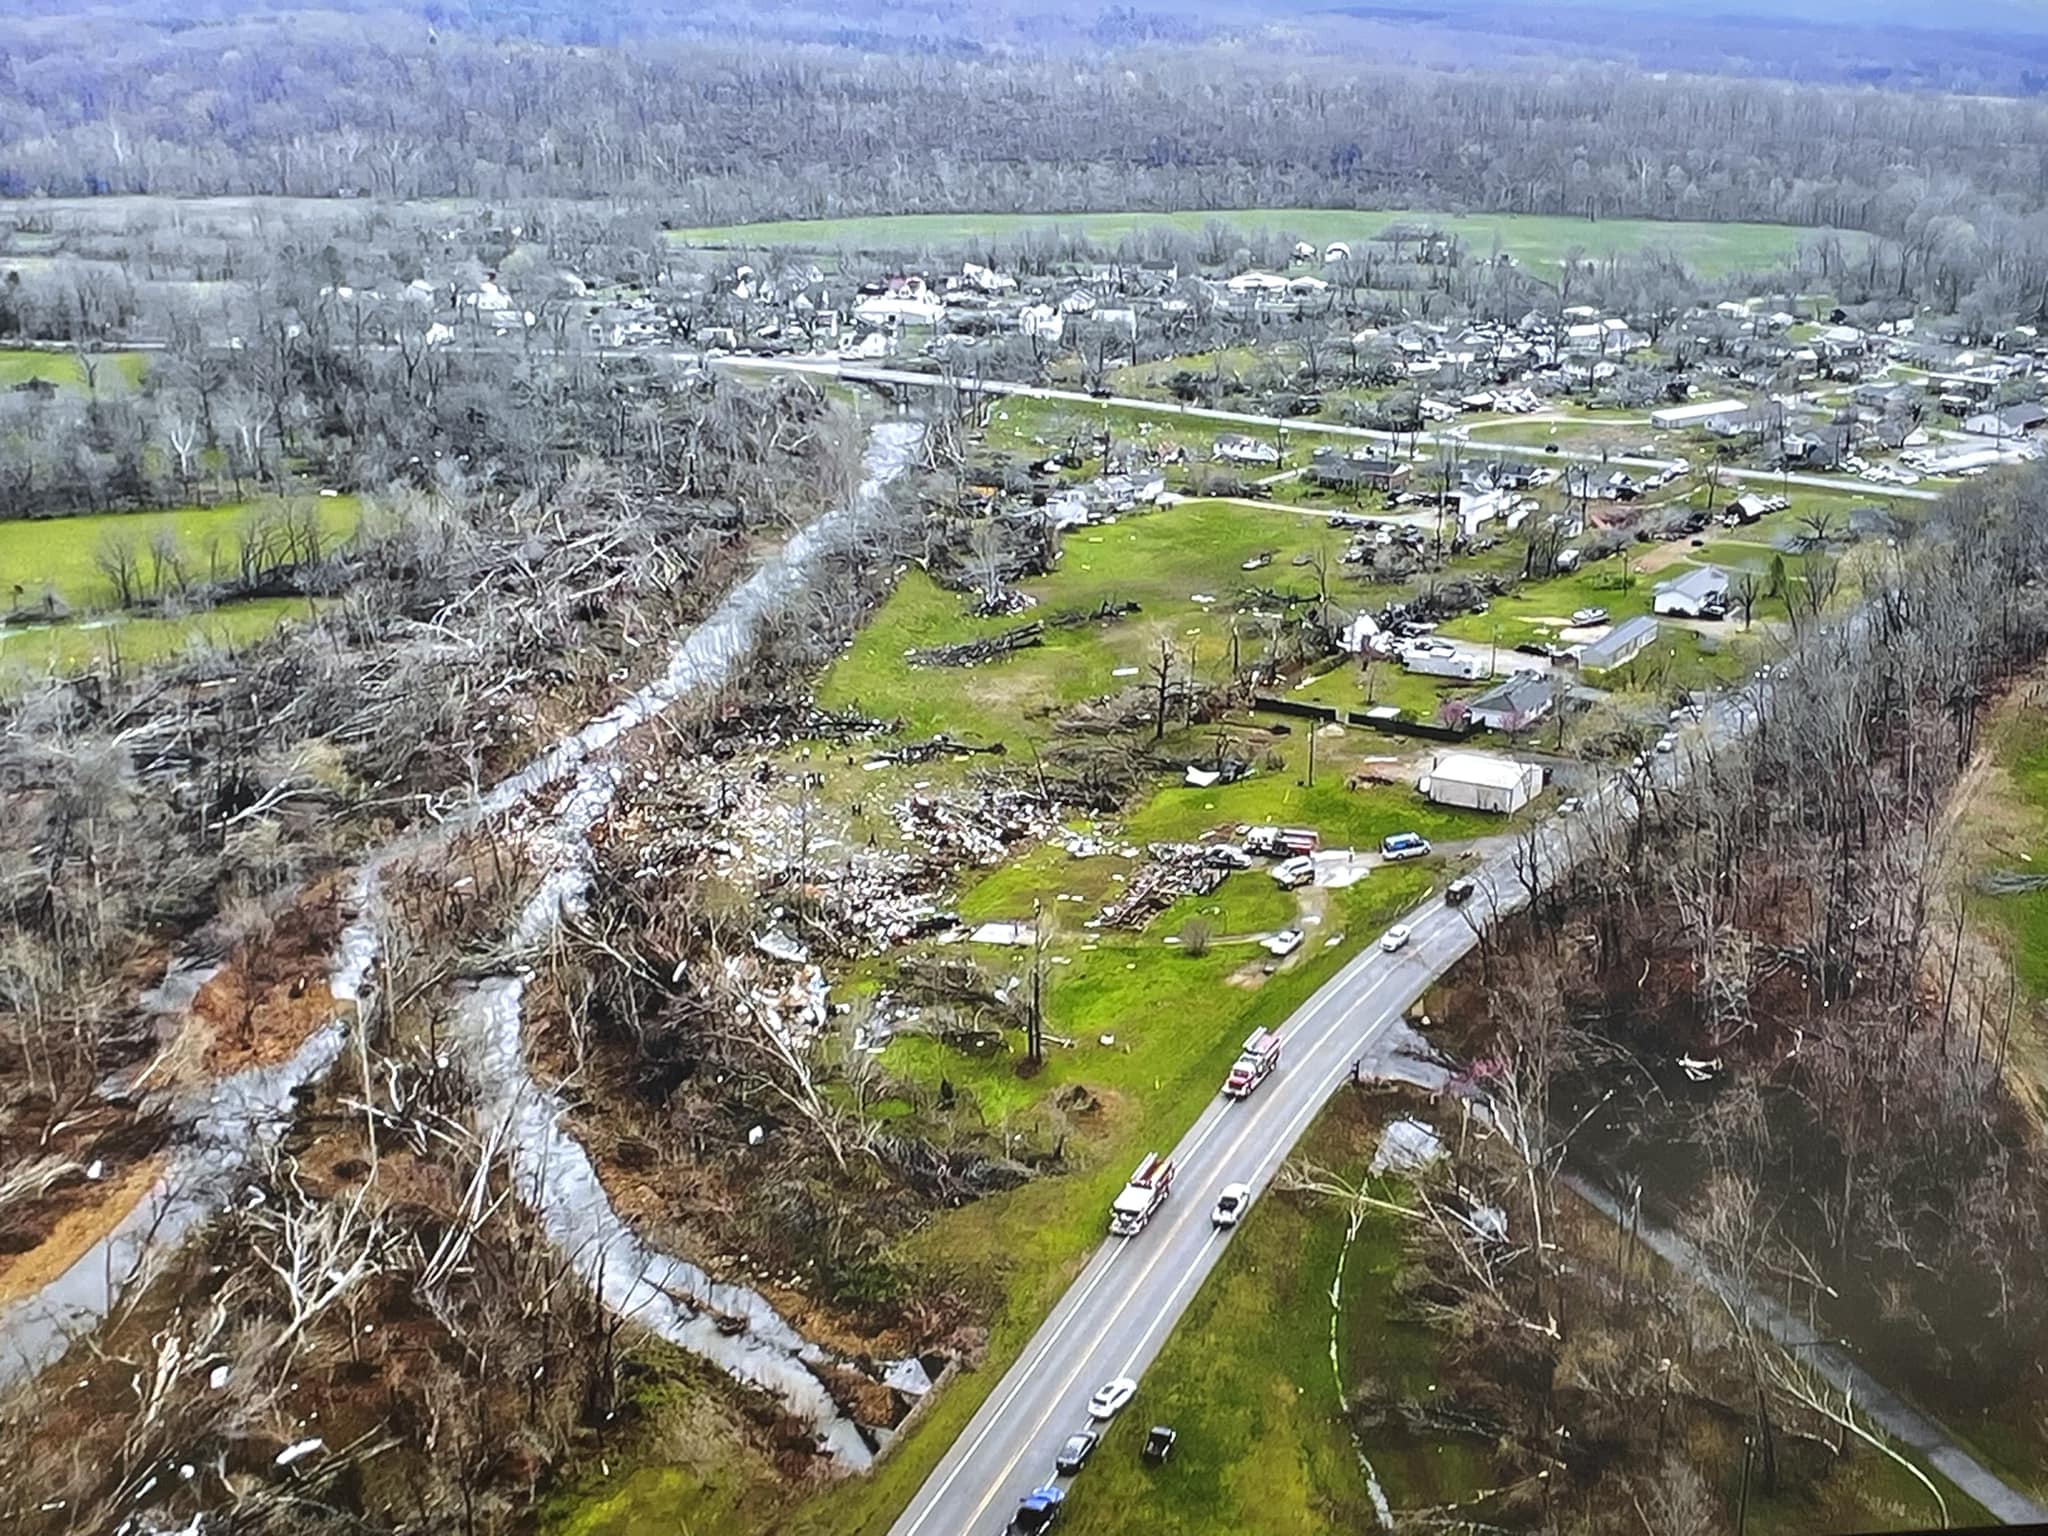 Deadly Tornado Kills At Least 5 People In Rural Southeastern Missouri